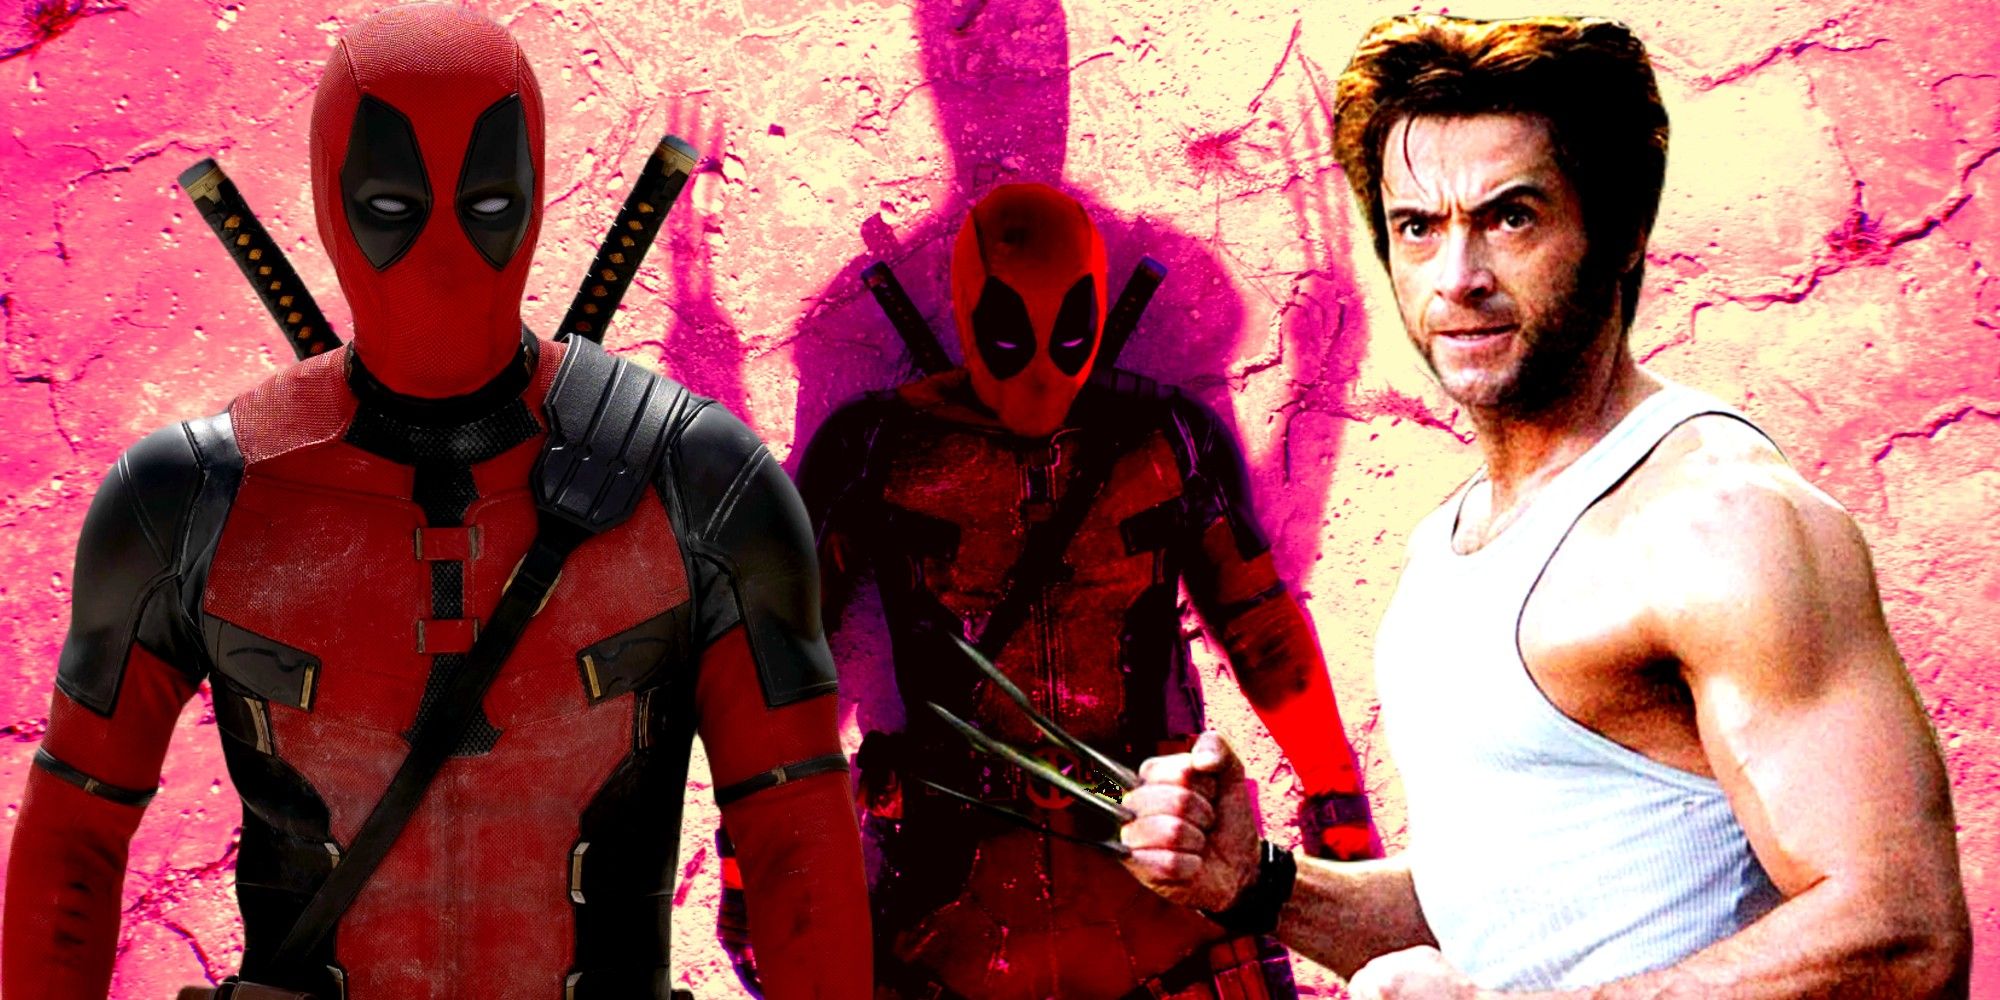 deadpool & Wolverine trailer blended image with ryan reynolds Deadpool and hugh jackman's Wolverine